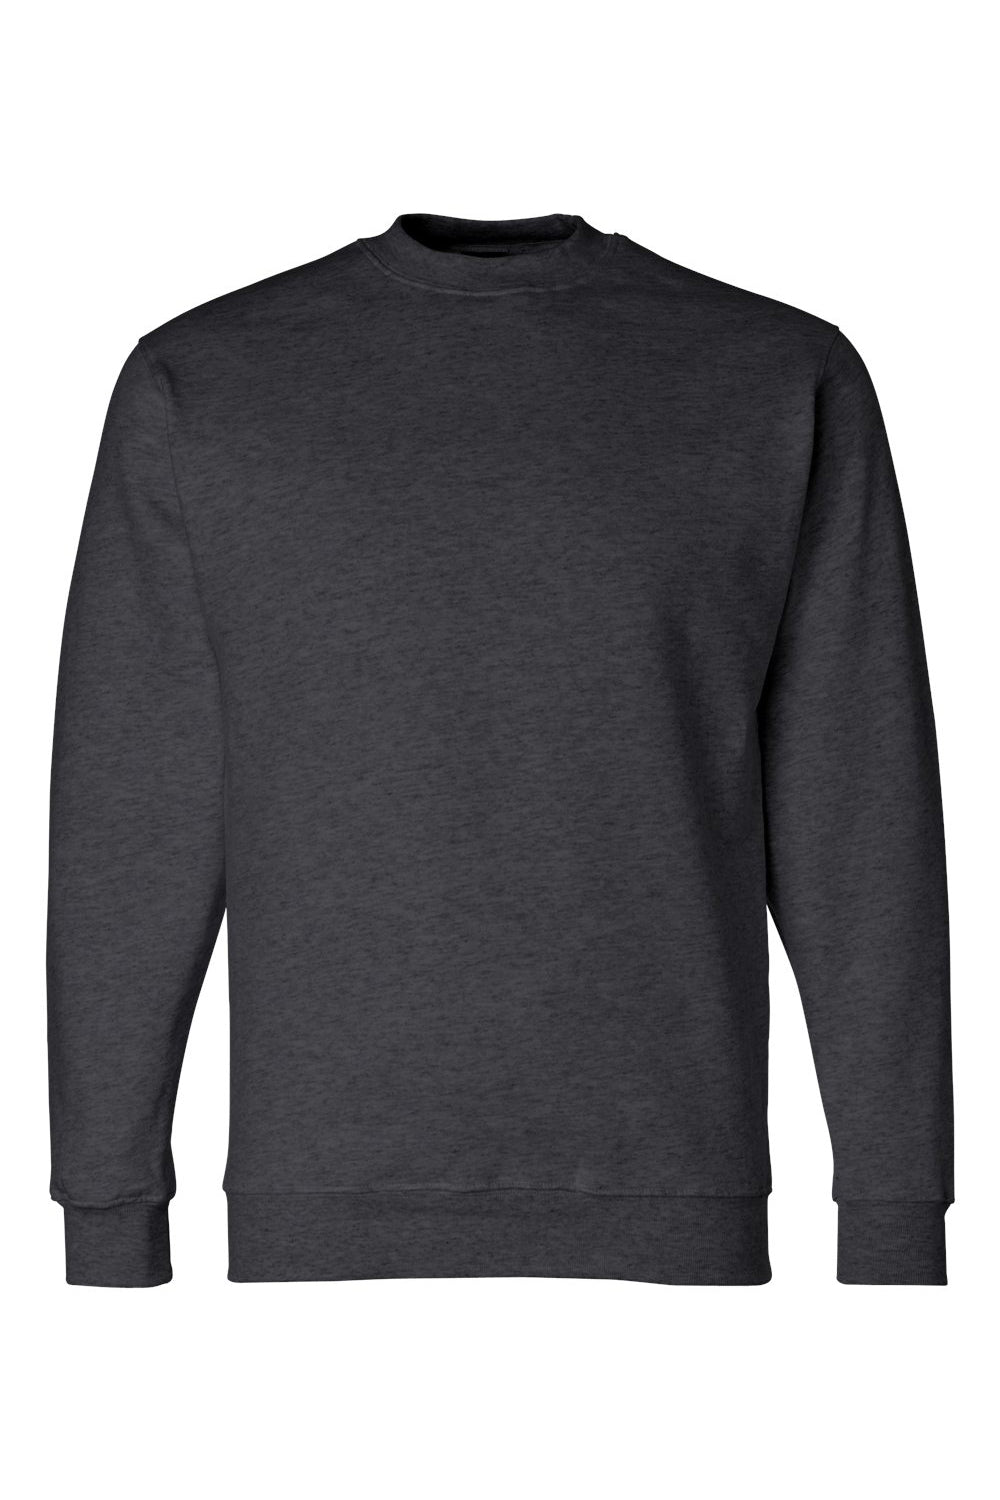 Bayside BA1102 Mens USA Made Crewneck Sweatshirt Heather Charcoal Grey Flat Front